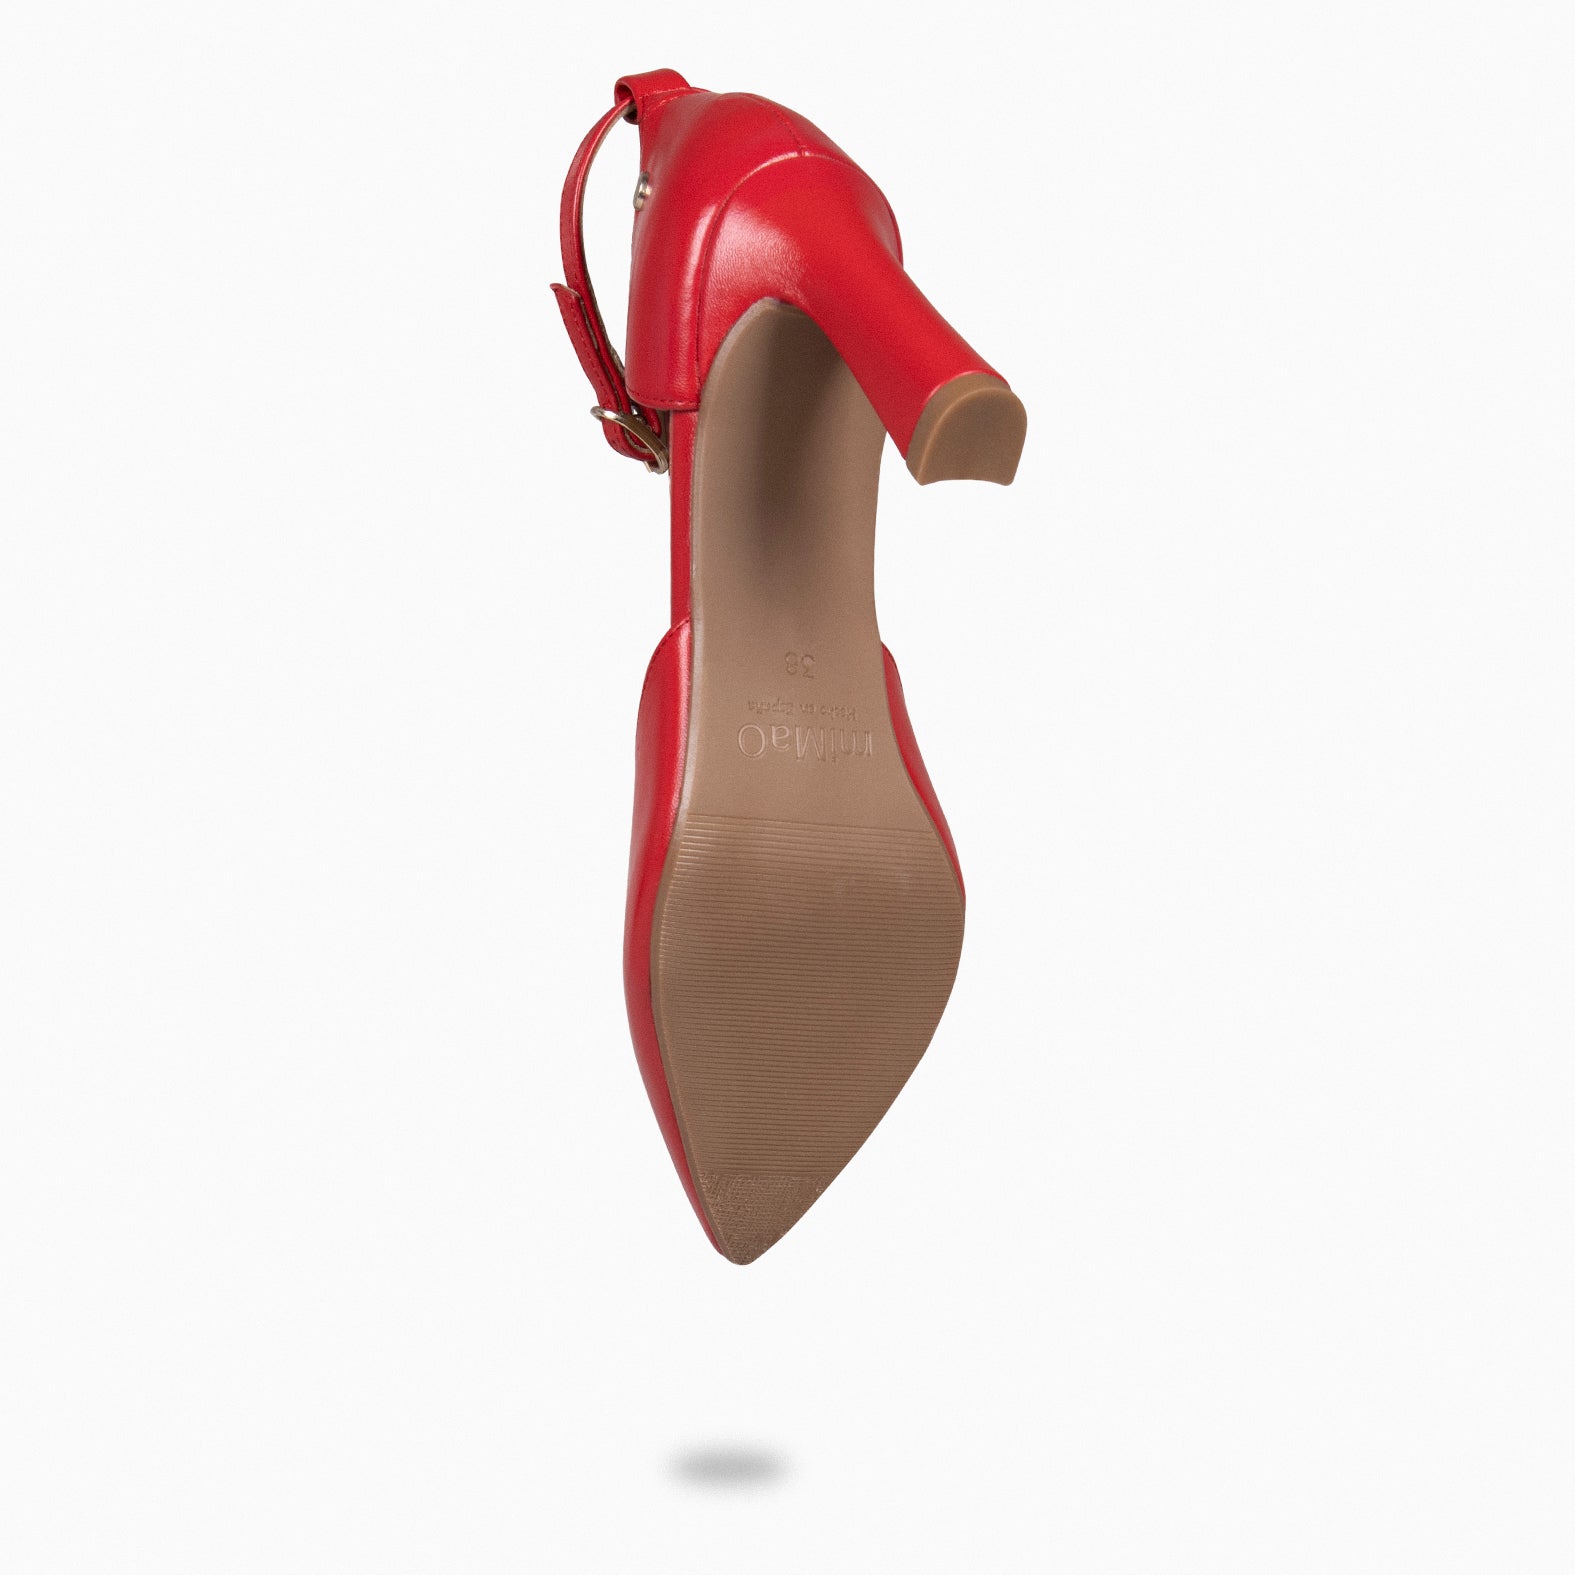 AINHOA – RED elegant heels